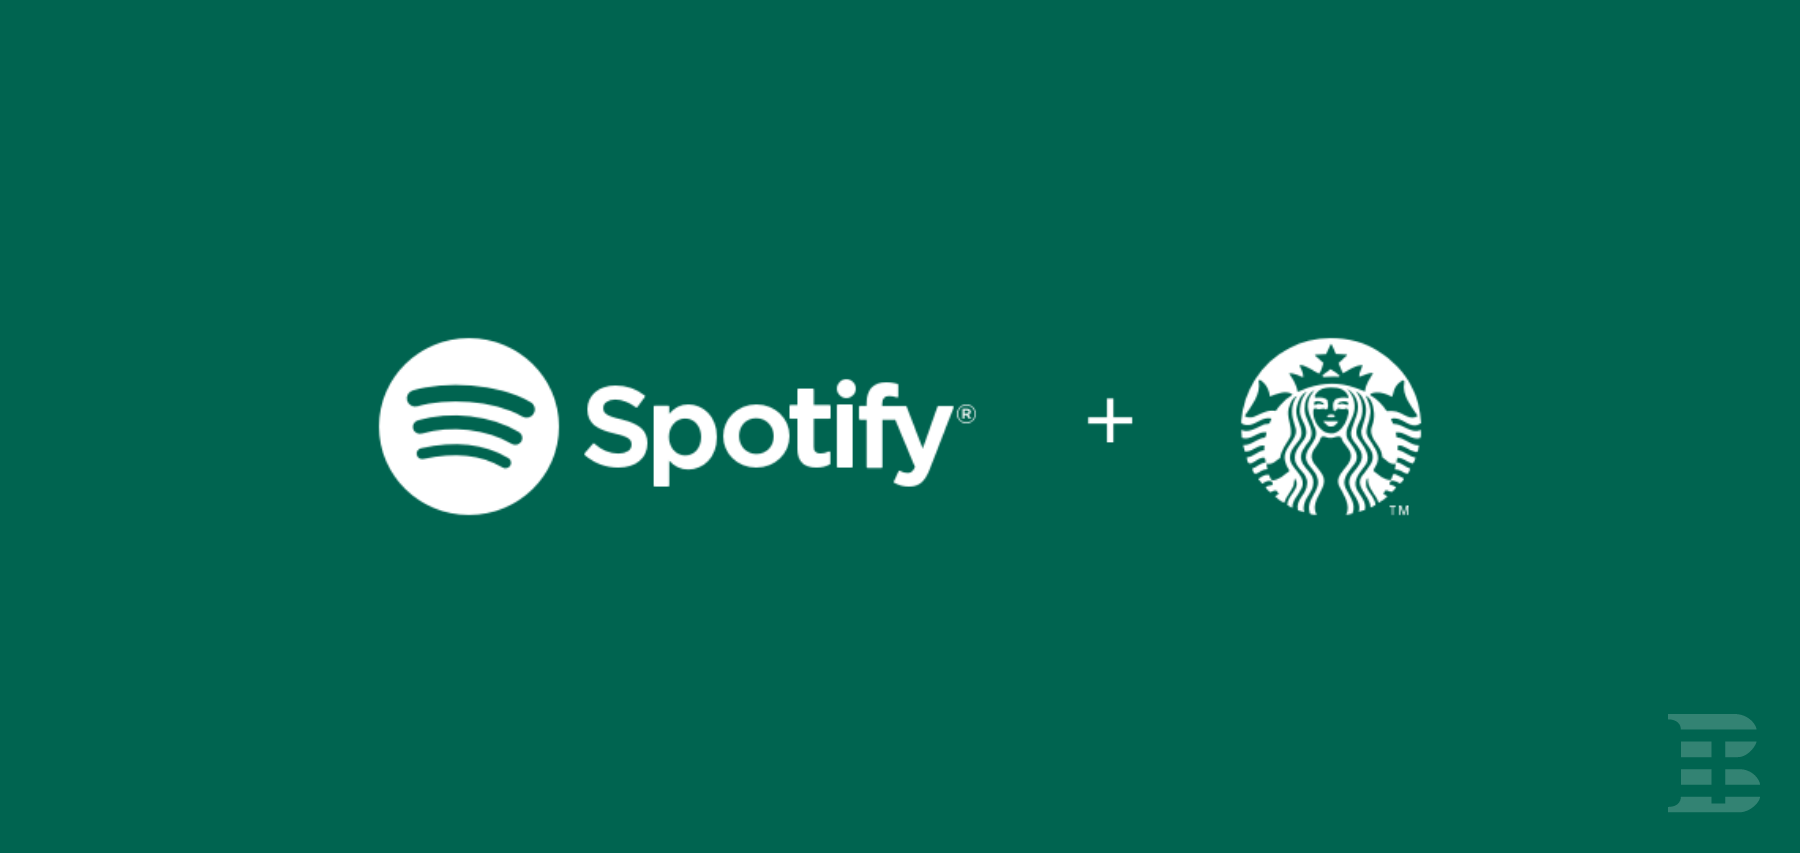 Spotify and Starbucks